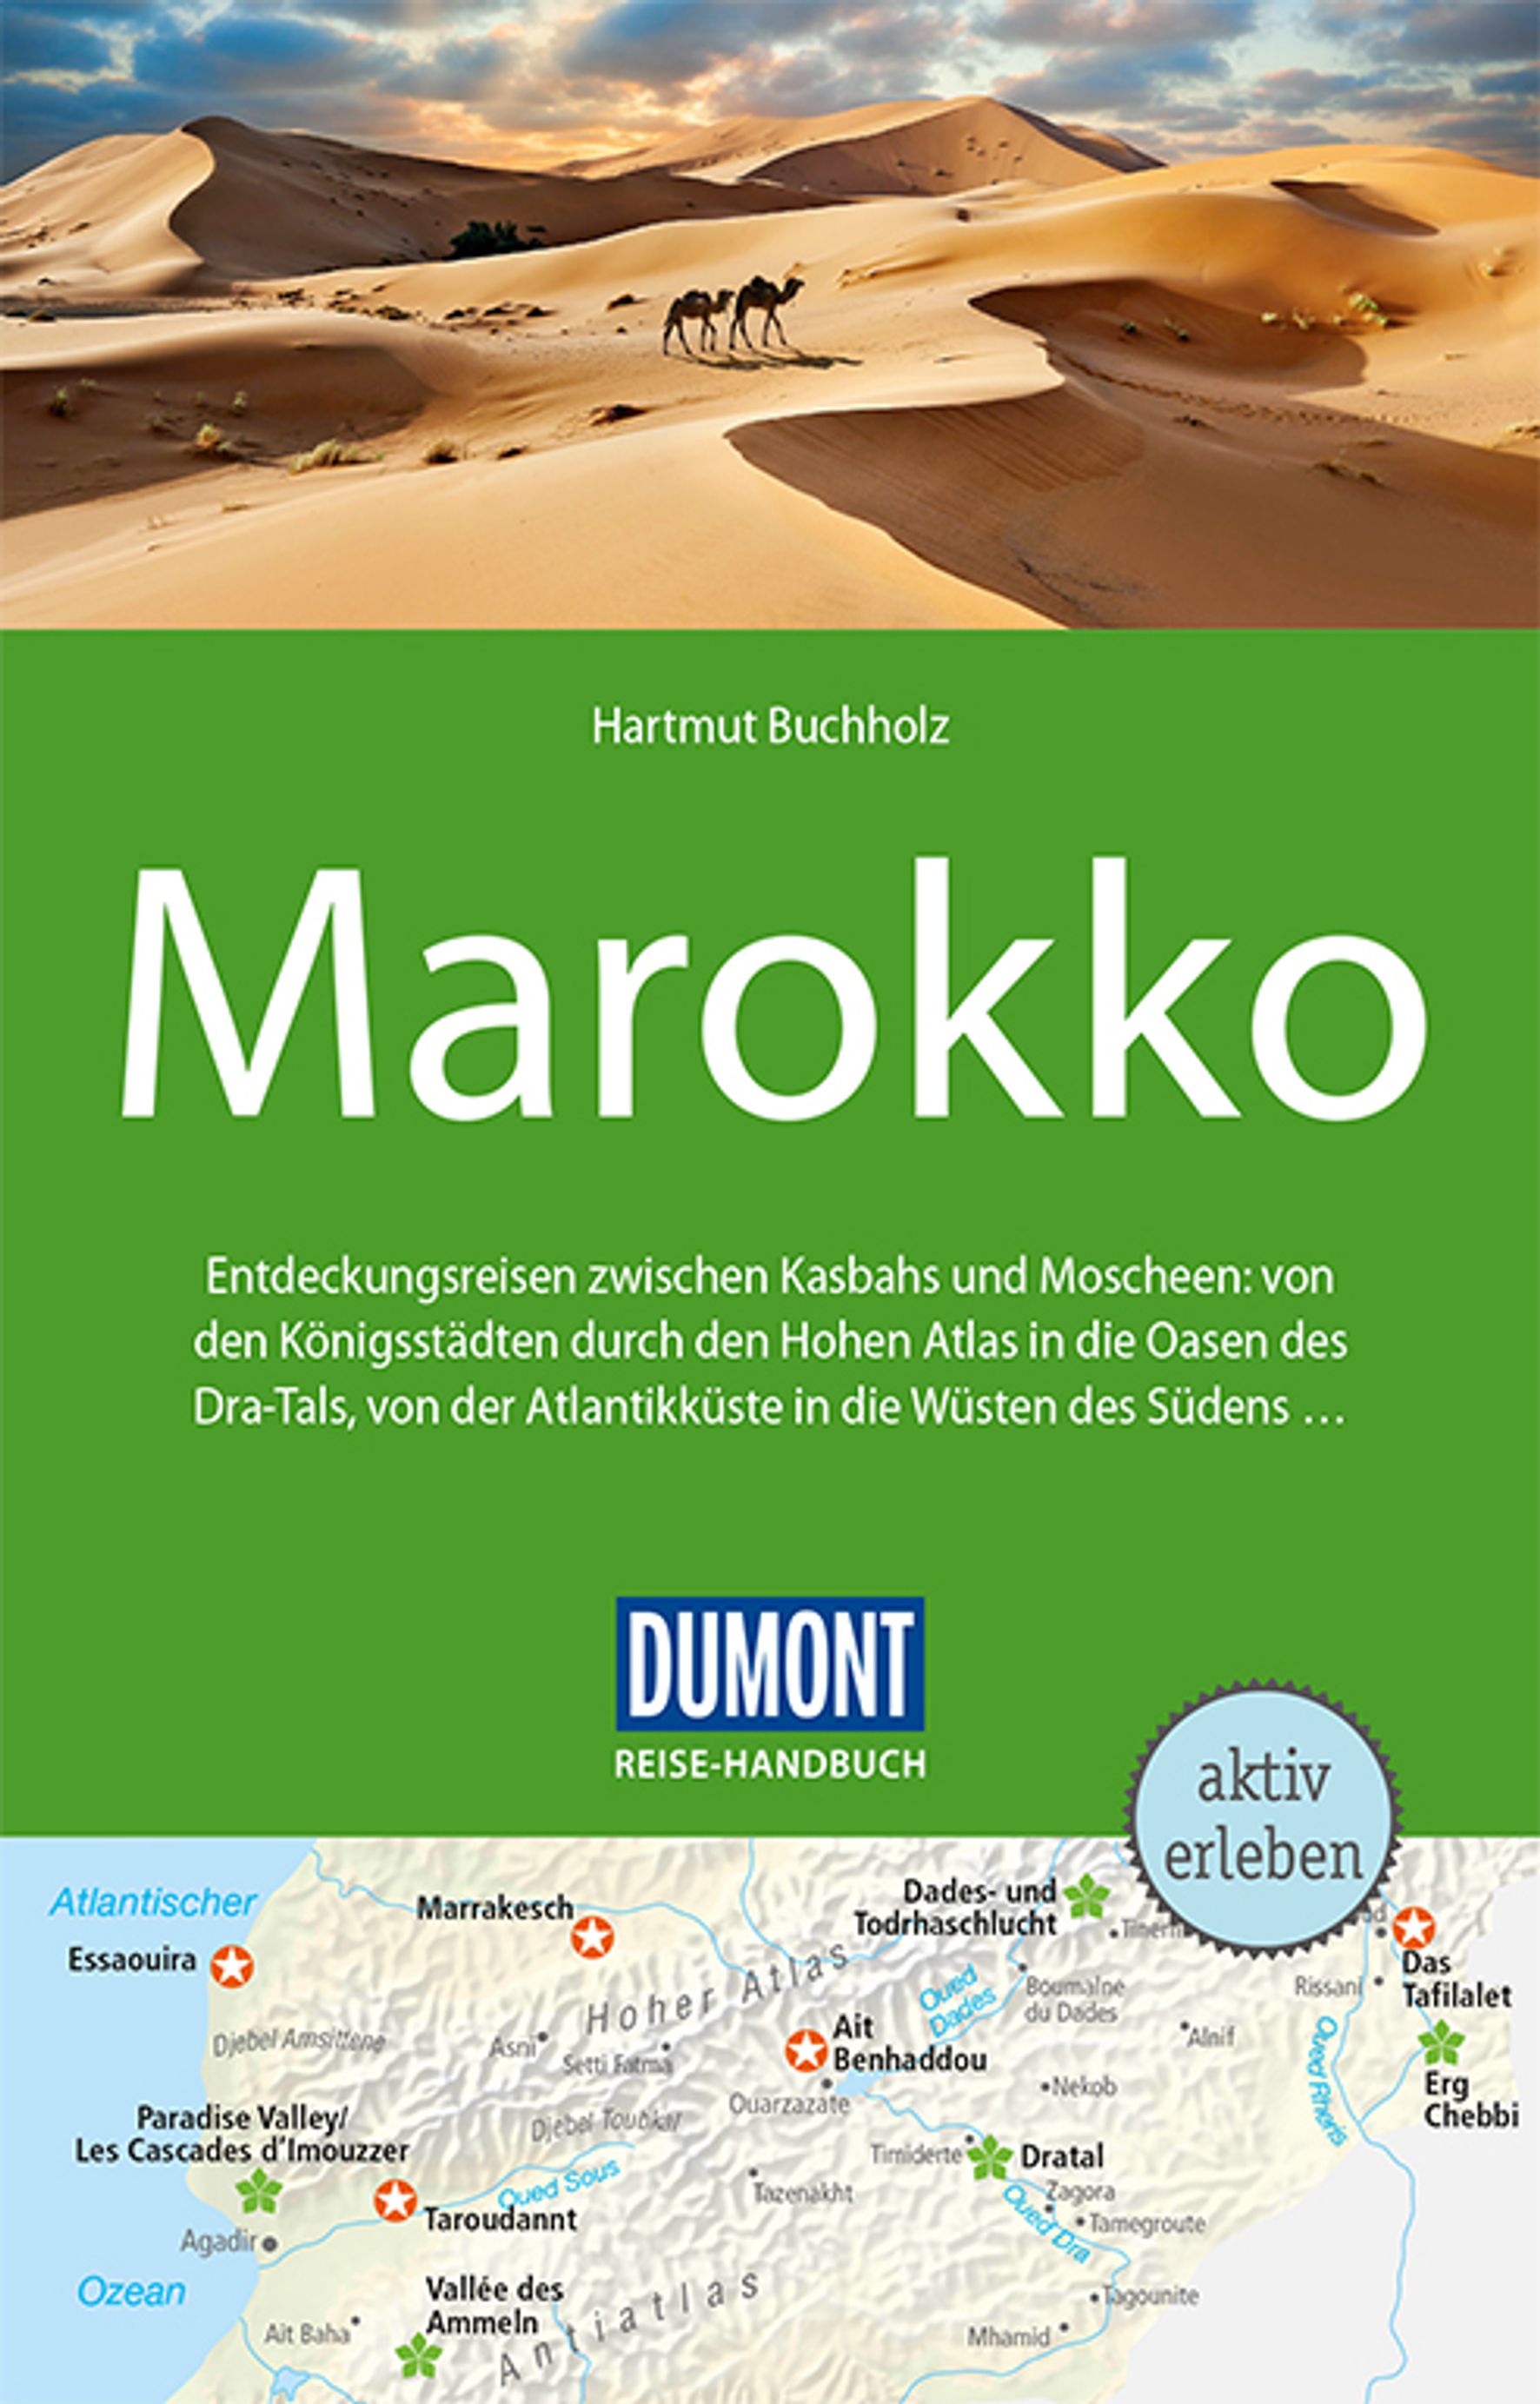 MAIRDUMONT Marokko (eBook)